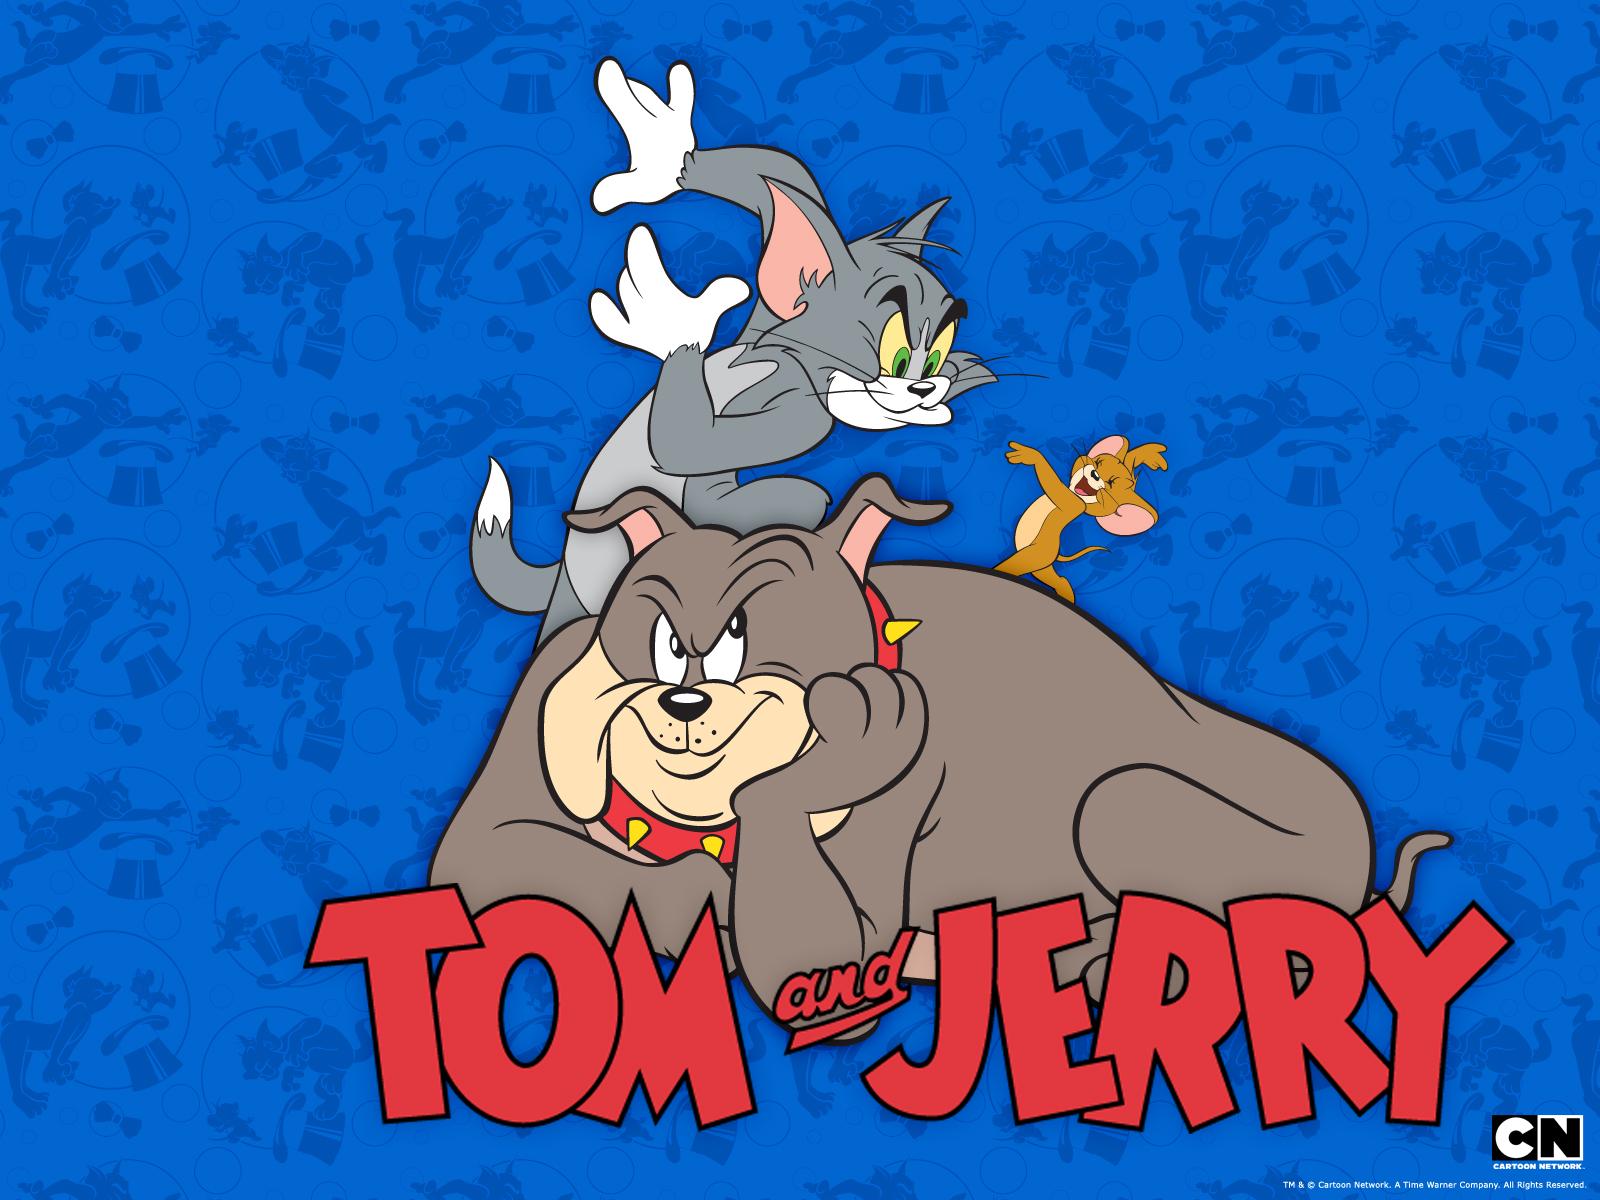 Tonight's TV picks: 'Tom & Jerry Show' reboot